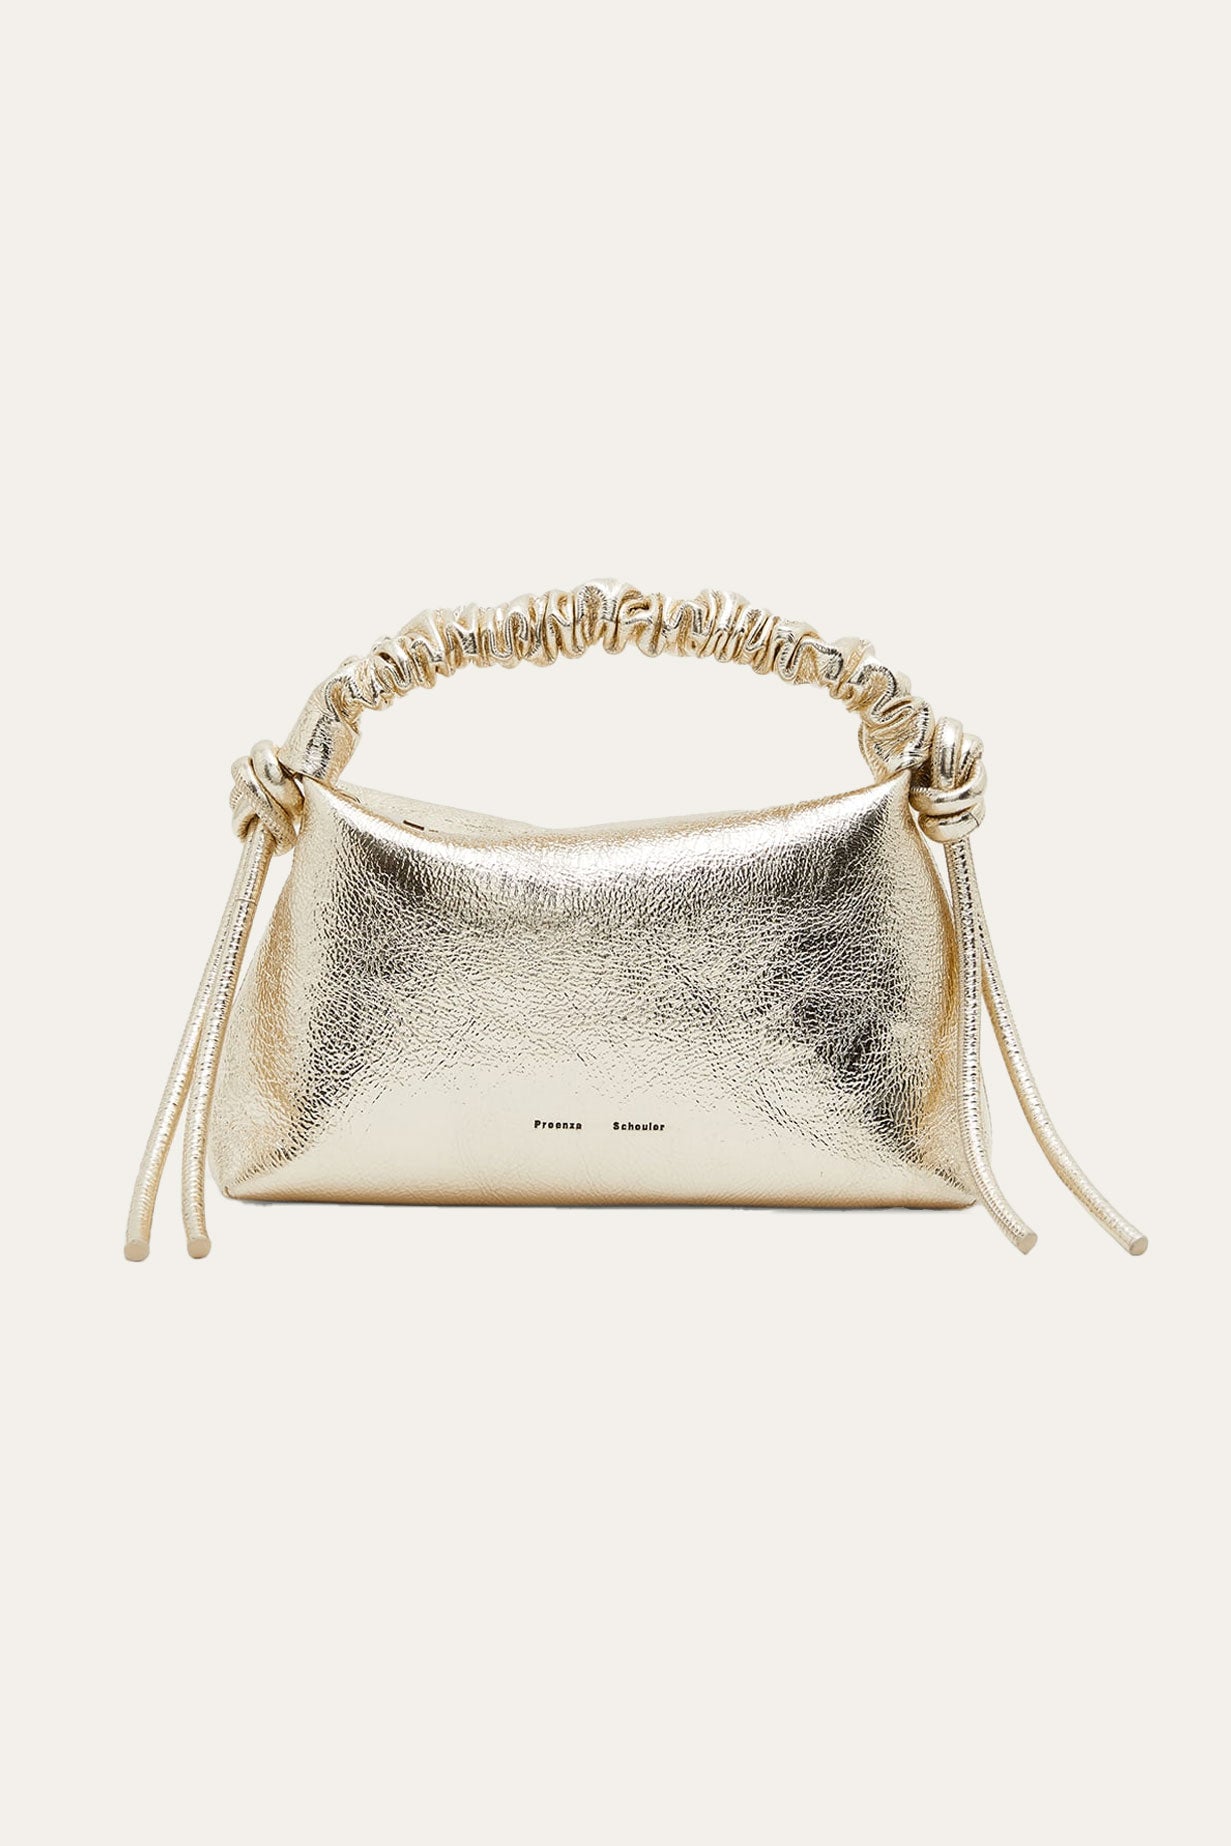 Shop the Hermès Version of a Fanny Pack Bag